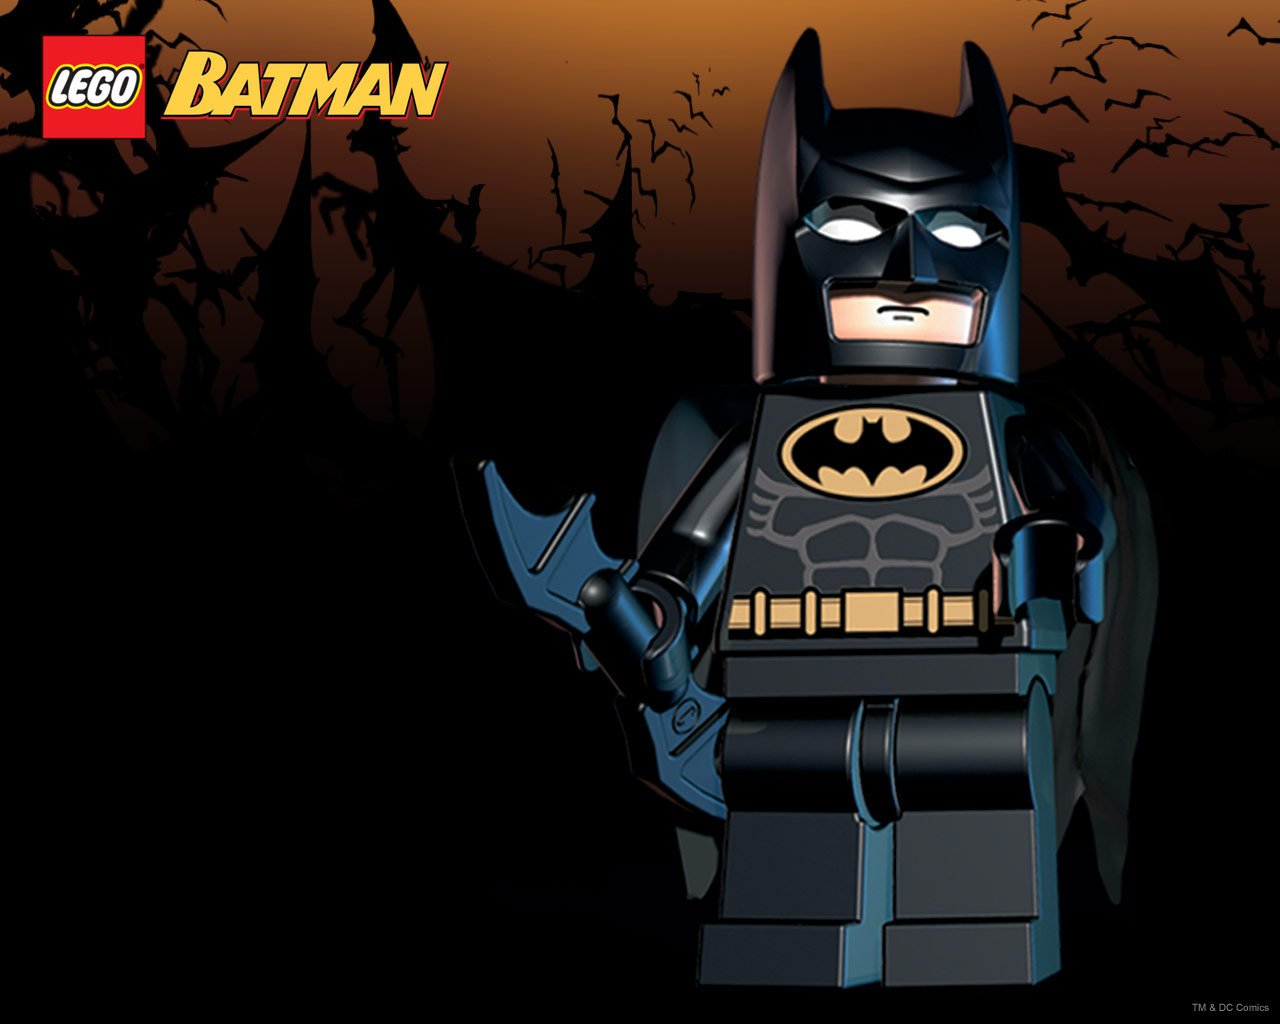 Lego images Lego Batman Wallpaper HD wallpaper and background photos 1280x1024